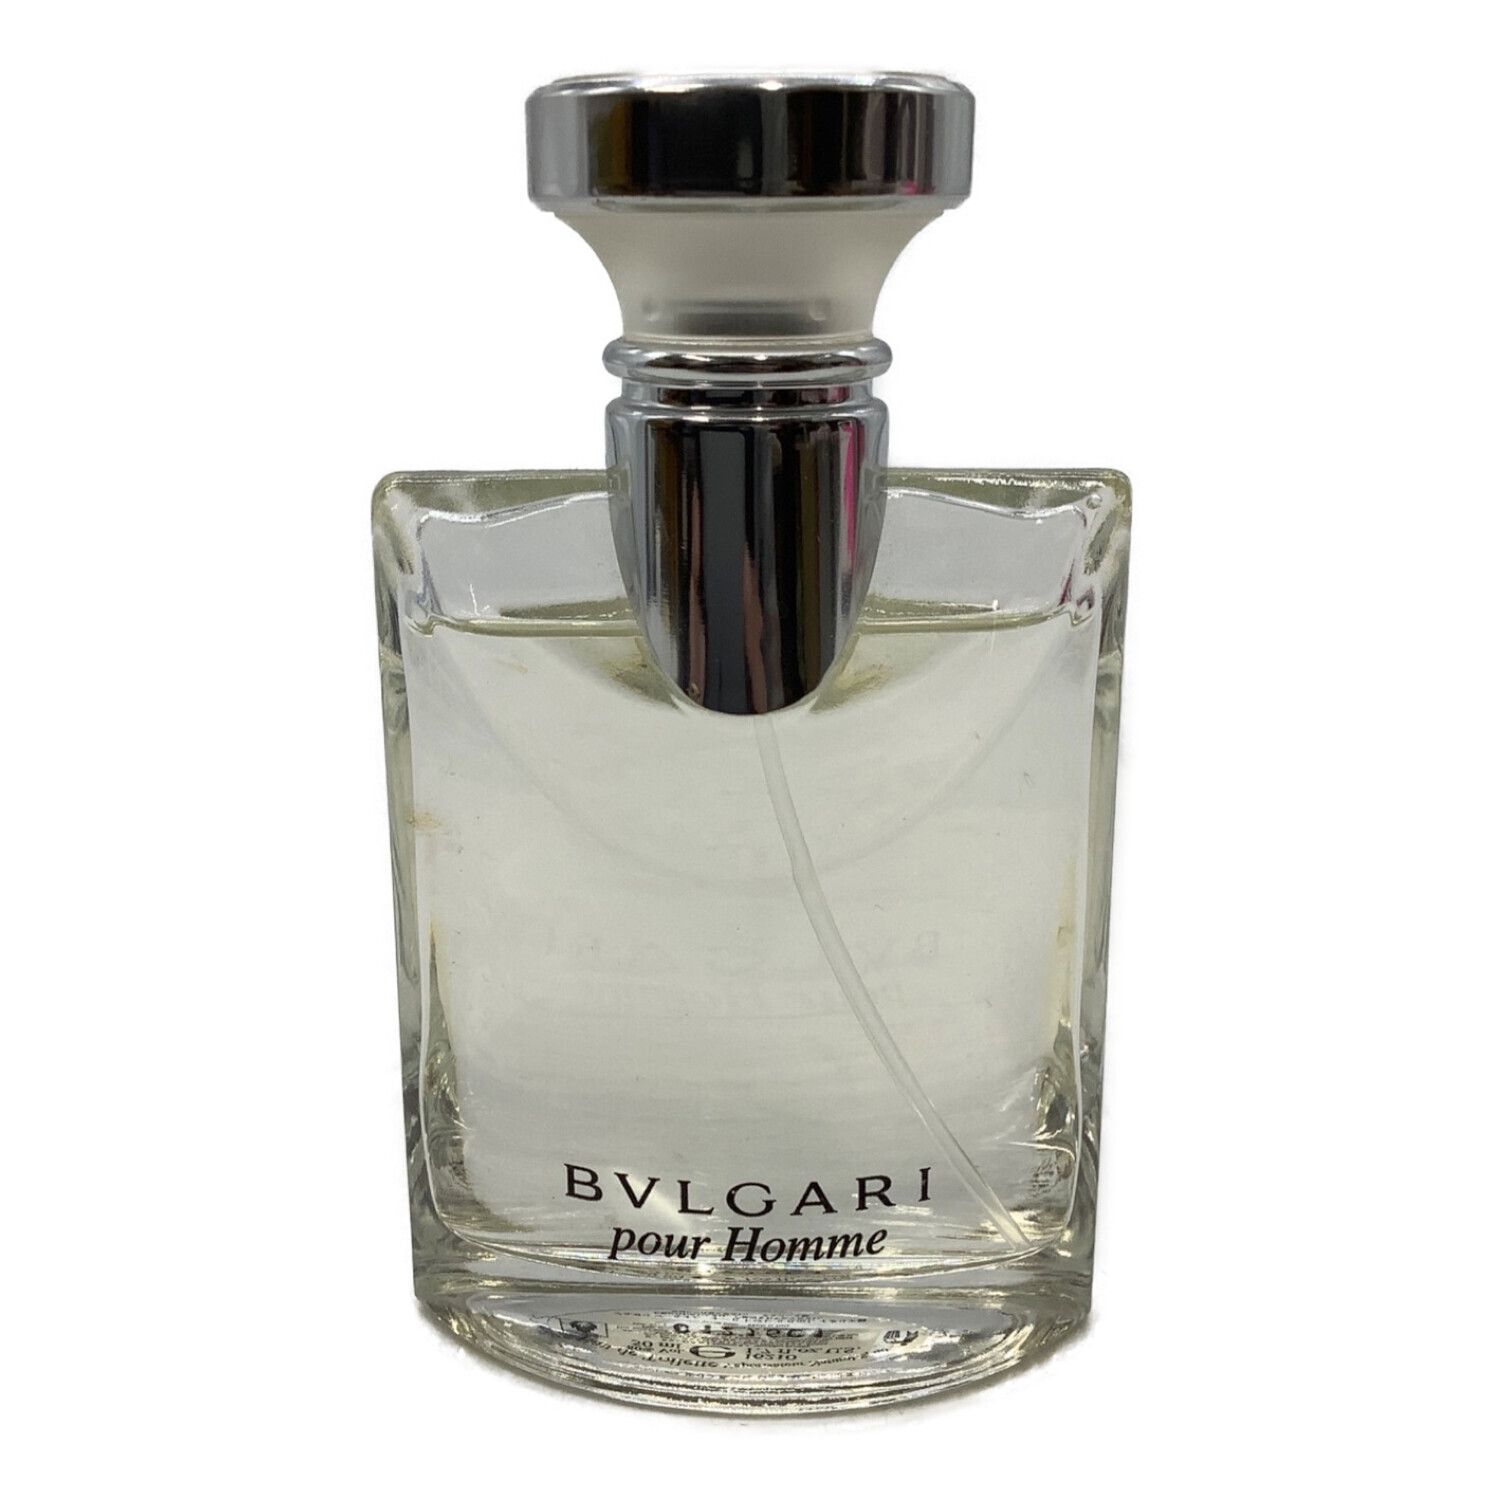 BVLGARI (ブルガリ) 香水 プールオム 50ml 残量90%